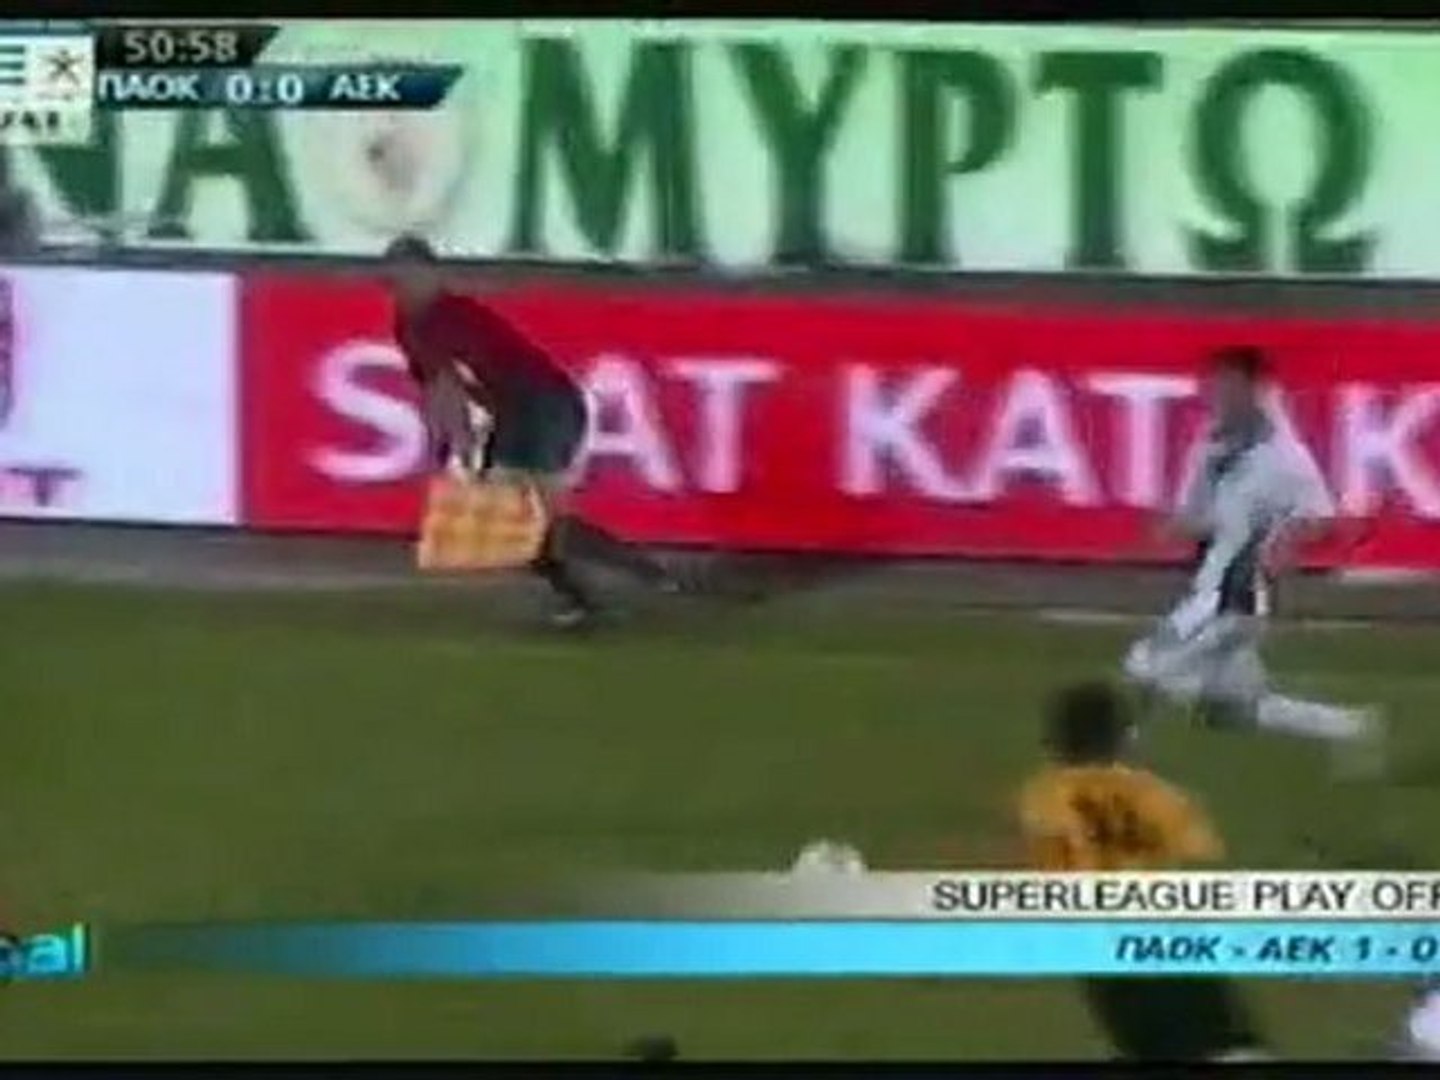 PAOK - AEK 1-0 Play Off Superleague - video Dailymotion